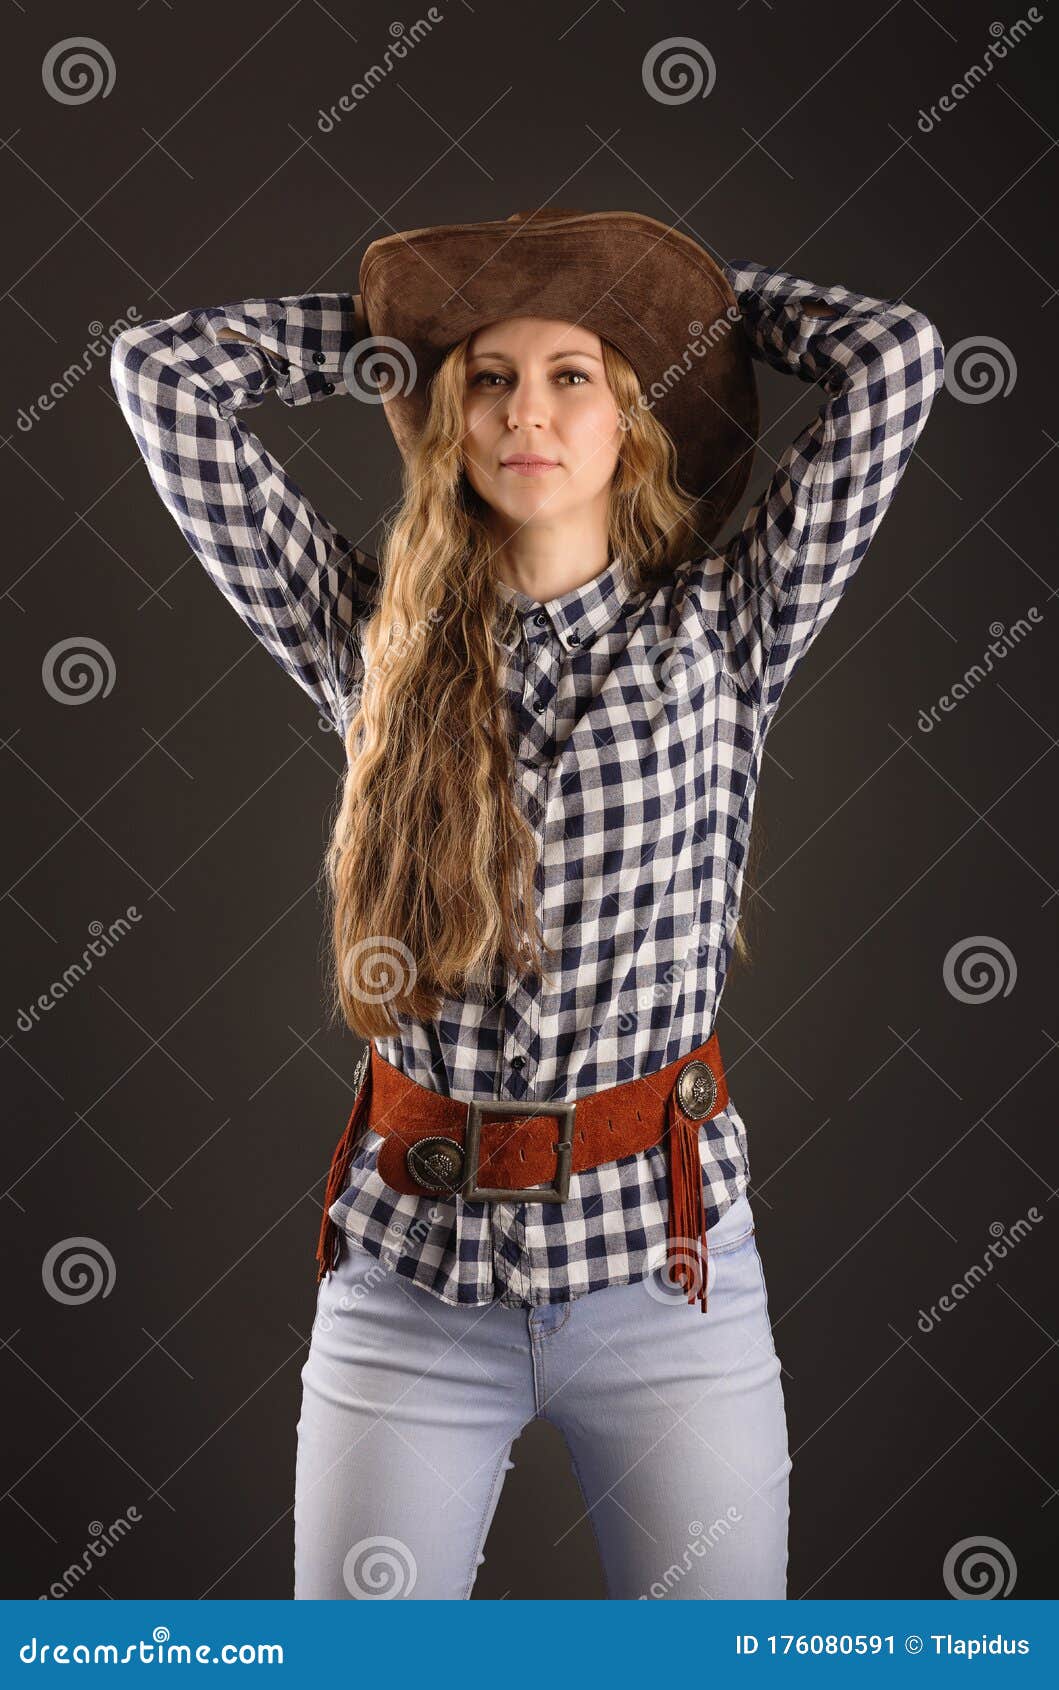 Studio Portrait of Girl with Cowboy Hat Stock Image - Image of girl ...